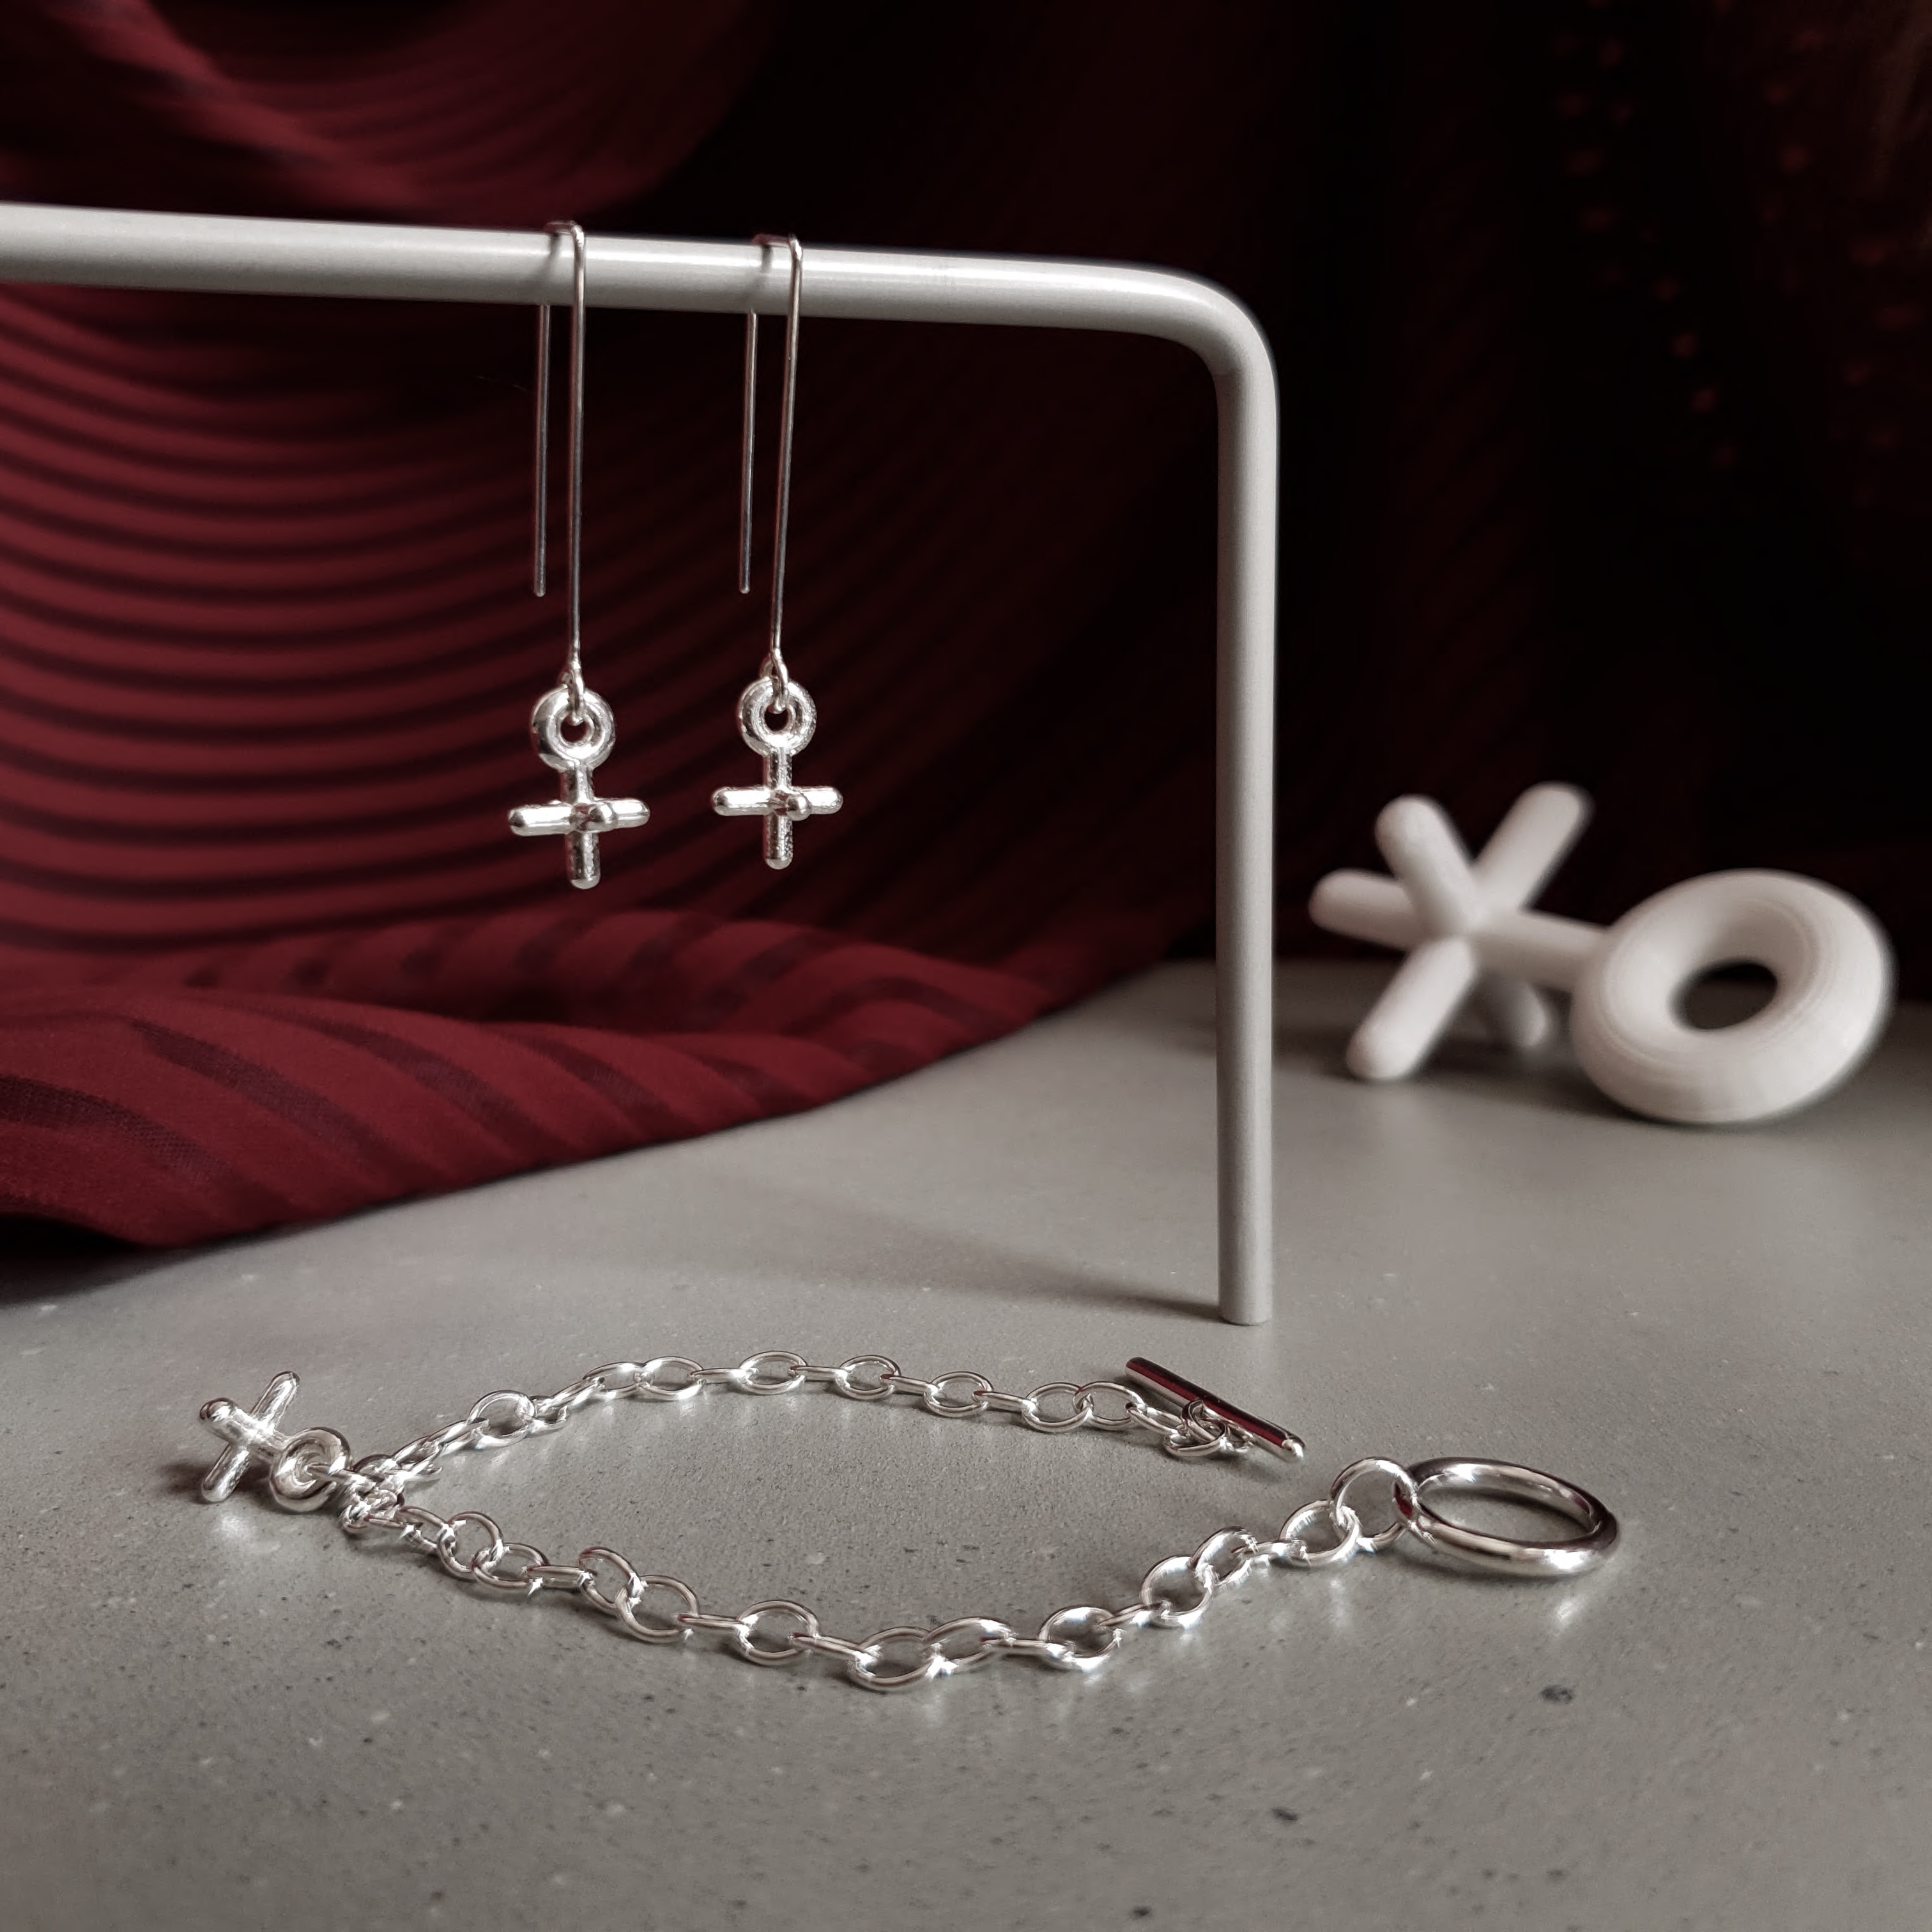 XO bracelet and earrings